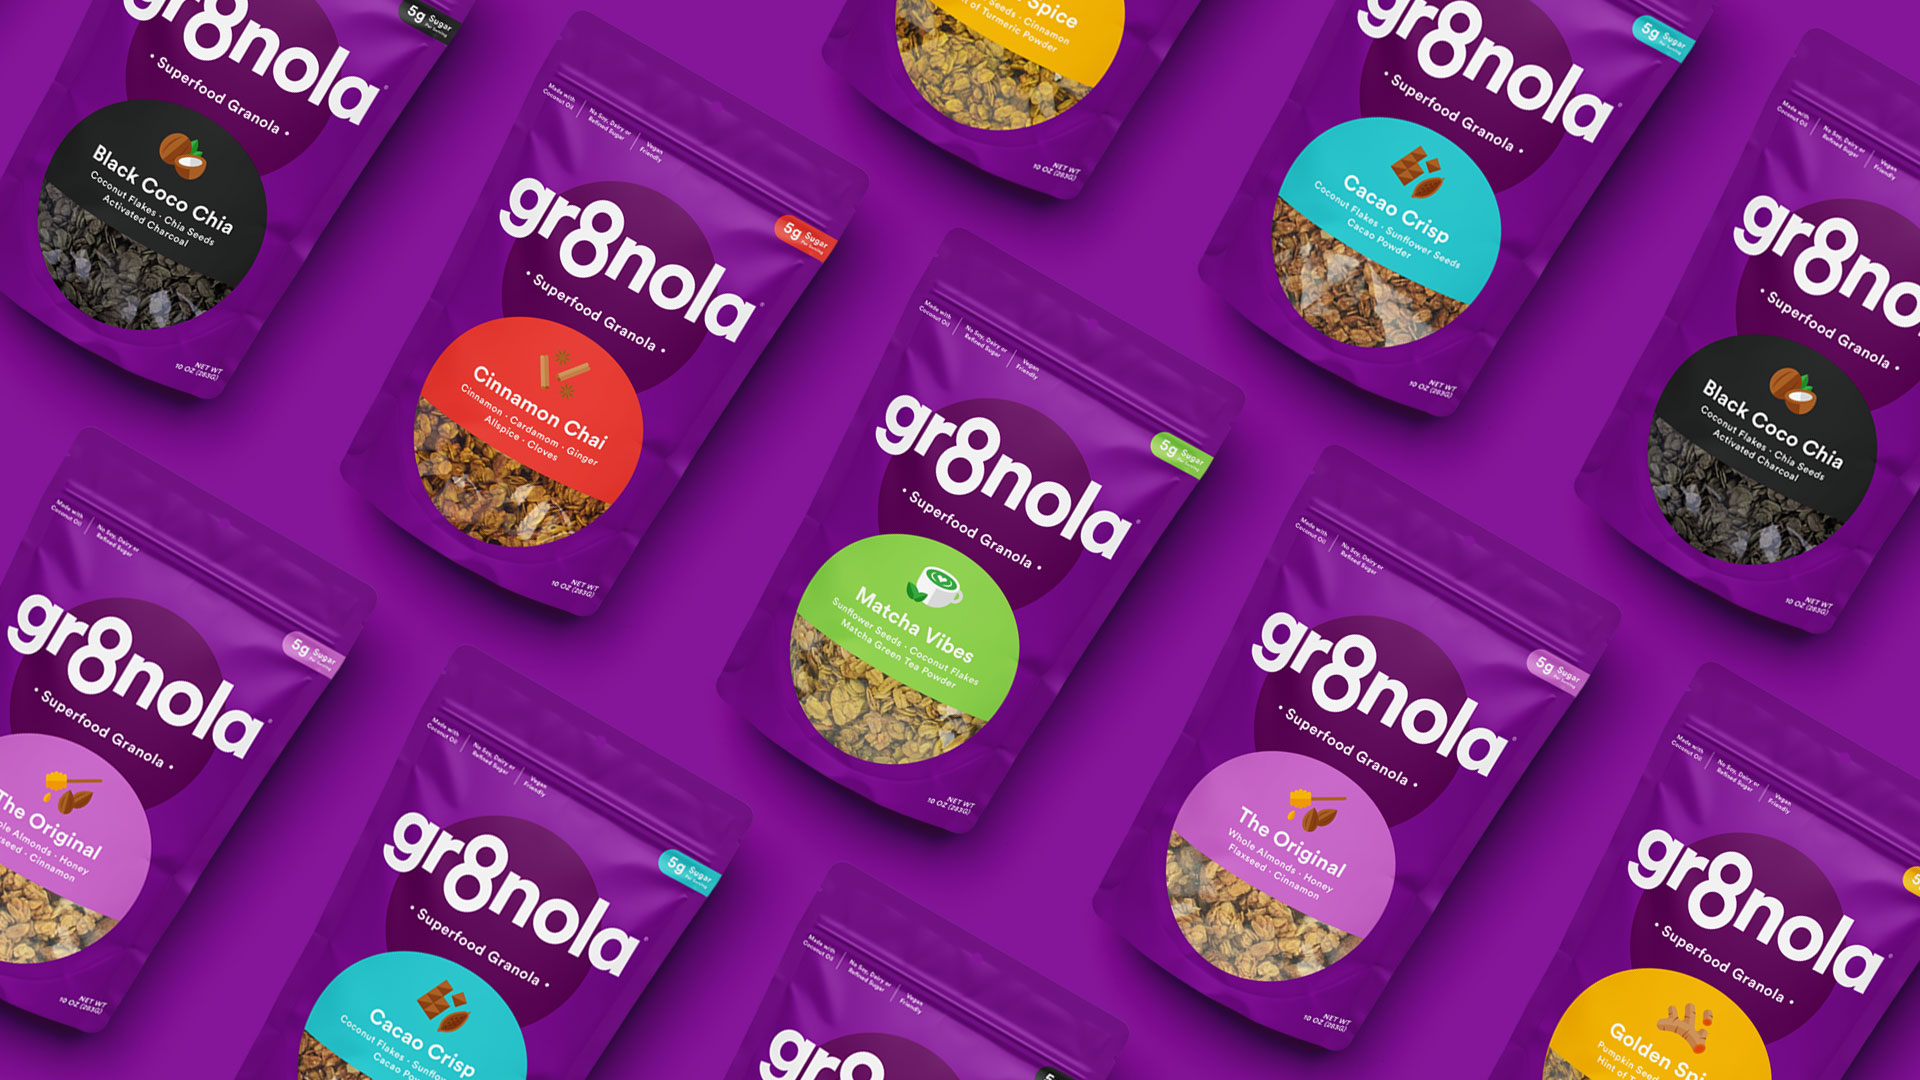 Gr8nola granola CPG packaging design and branding